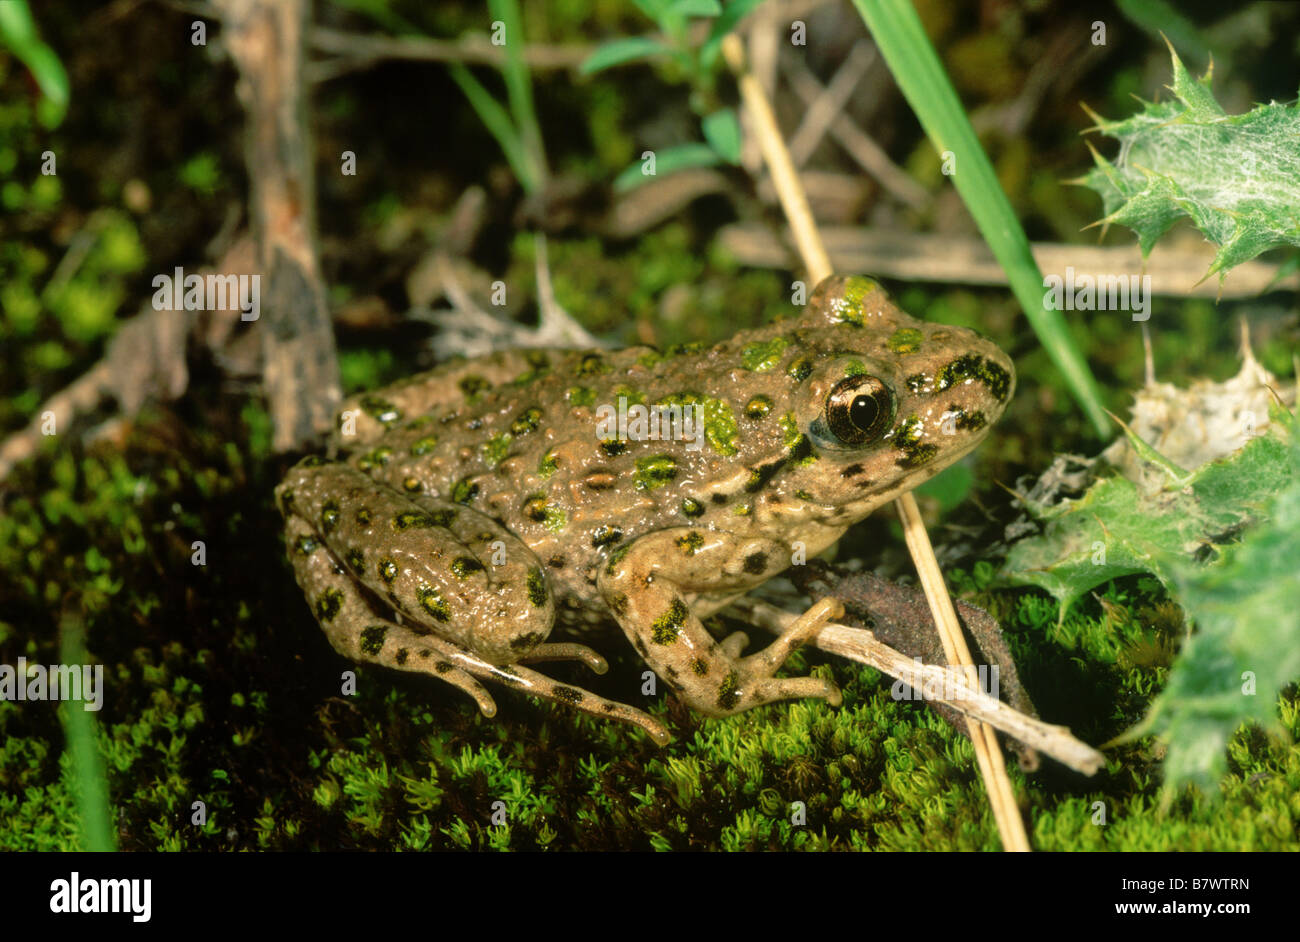 Common Parsley Frog (Pelodytes punctatus) Stock Photo